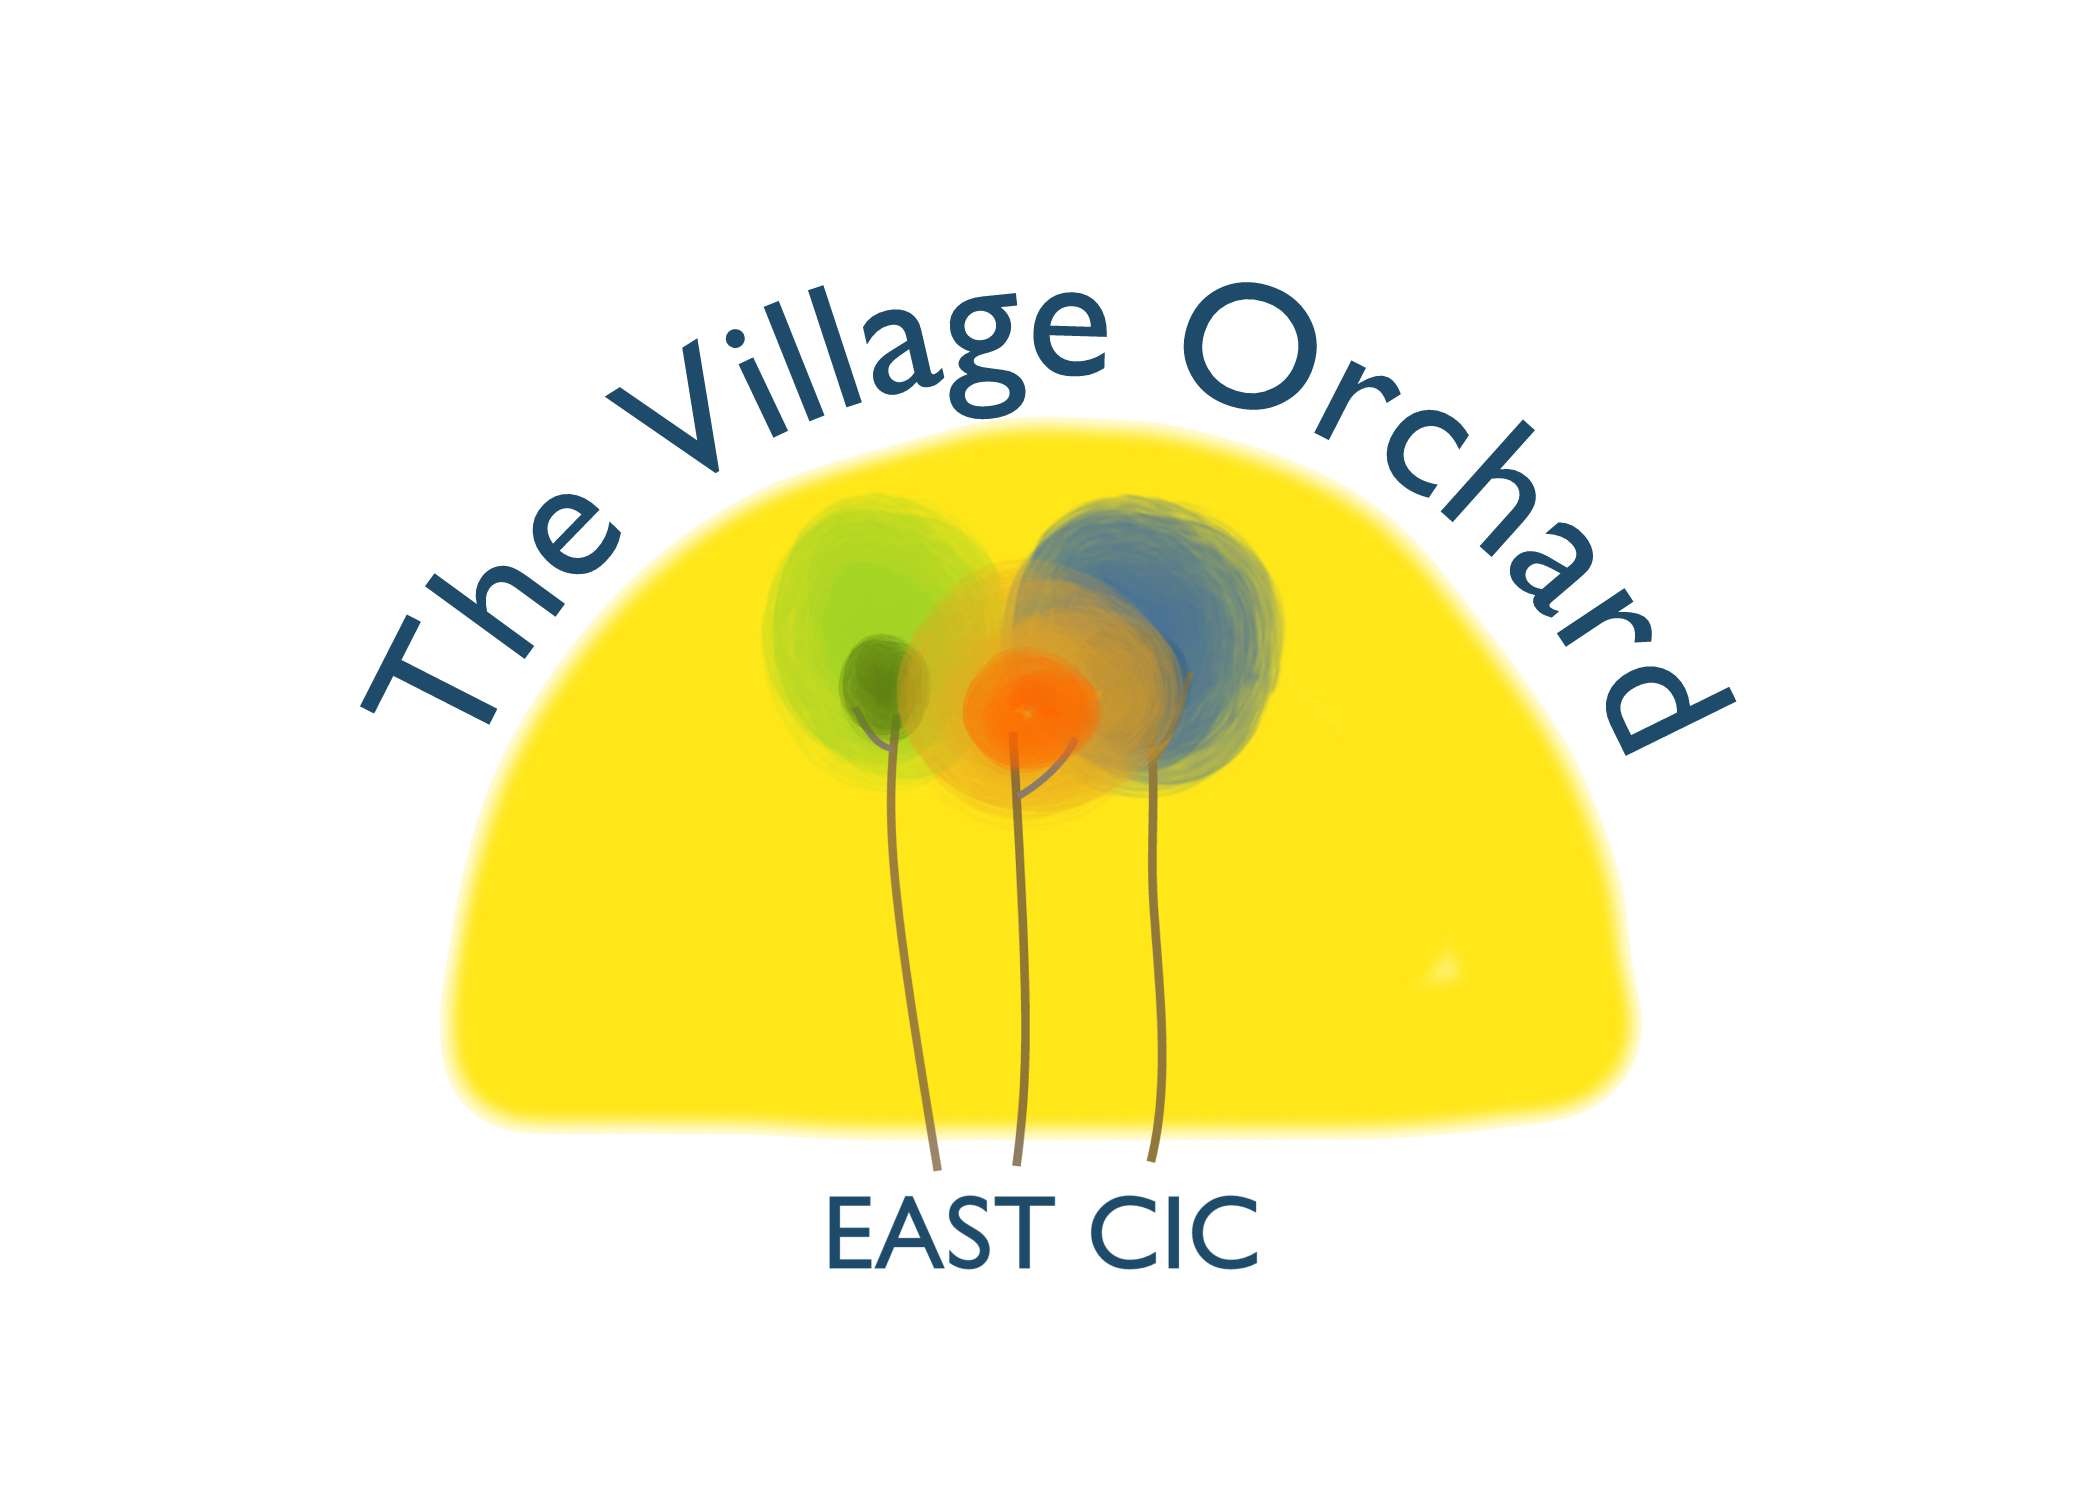 Village Orchard East CIC